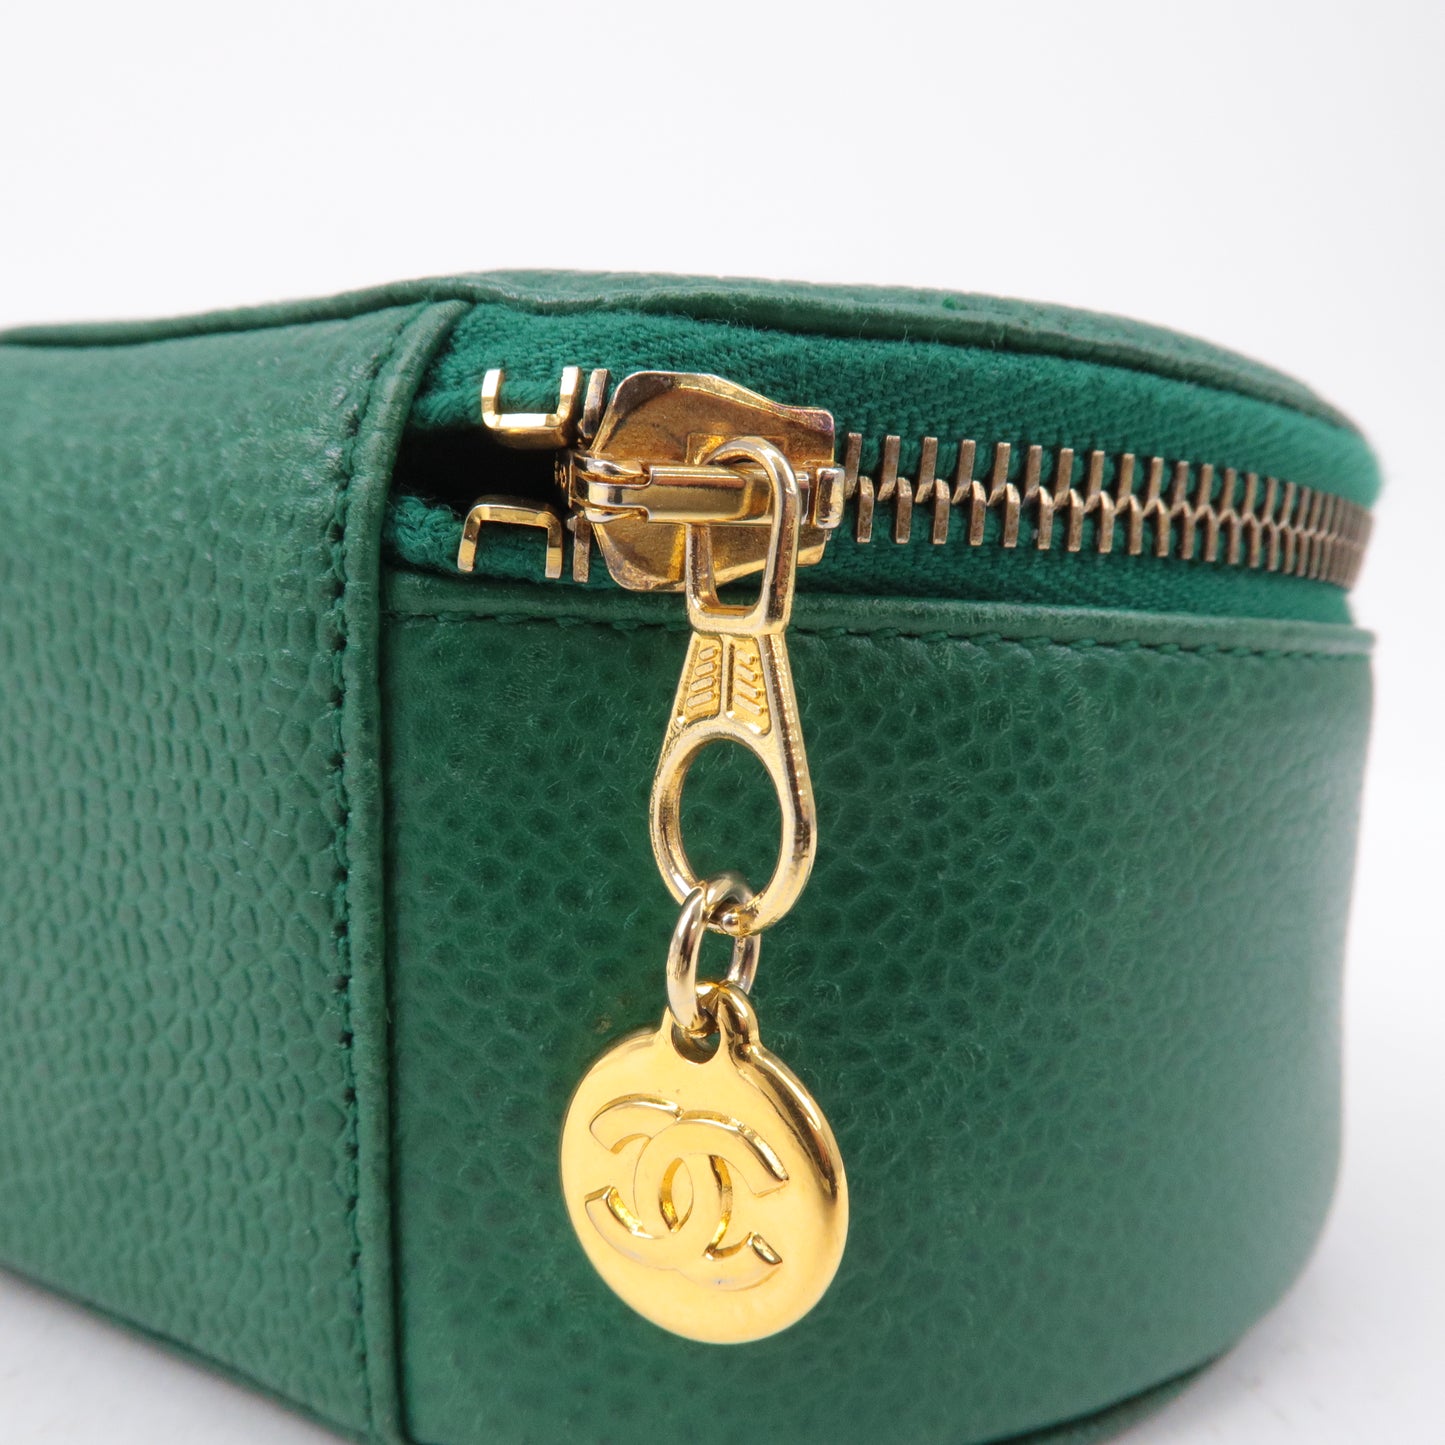 CHANEL Caviar Skin Jewelry Case Accessories Case Green Gold